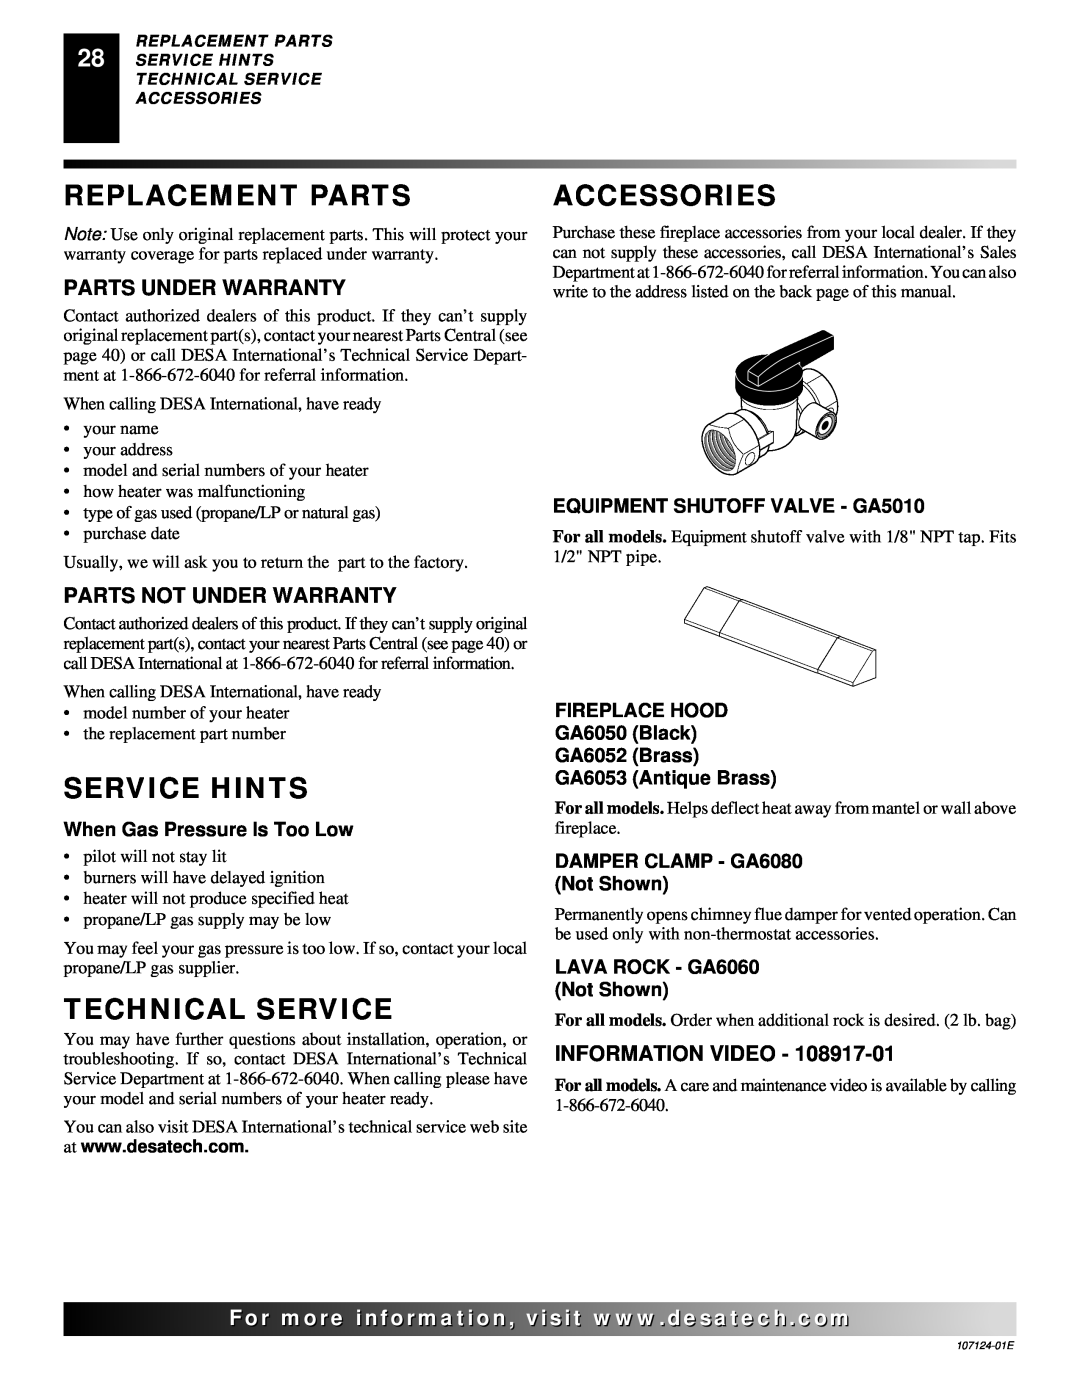 Desa CGD3018PT Replacement Parts, Accessories, Service Hints, Technical Service, Parts Under Warranty, Information Video 